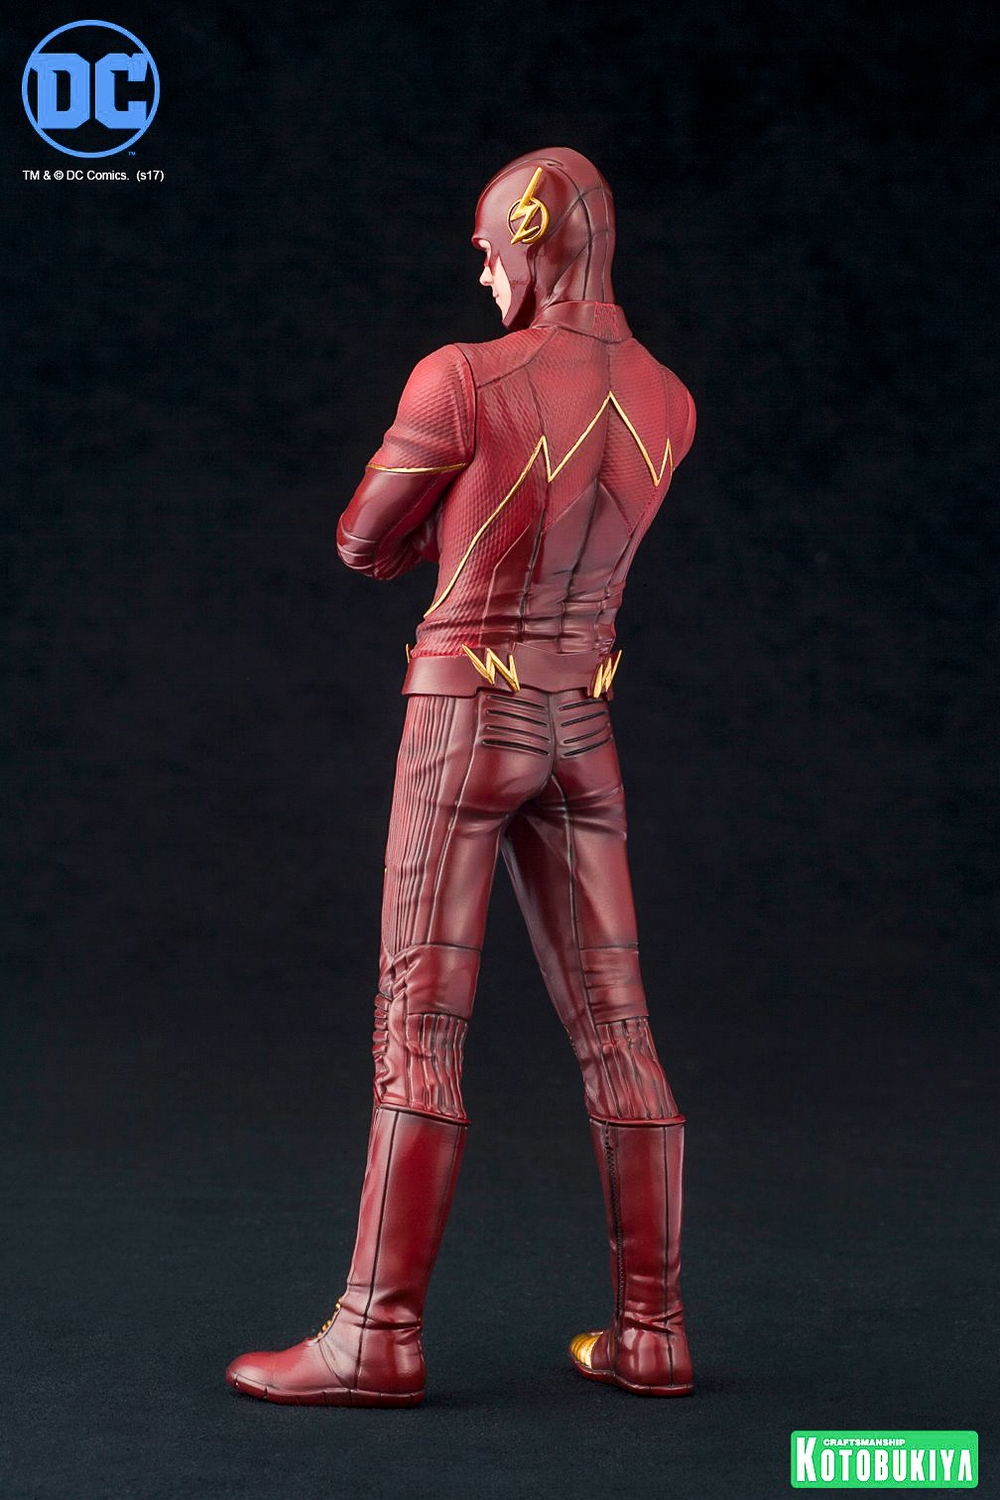 Kotobukiya-Barry-Allen-The-Flash-ARTFX-plus-statue-004.jpg